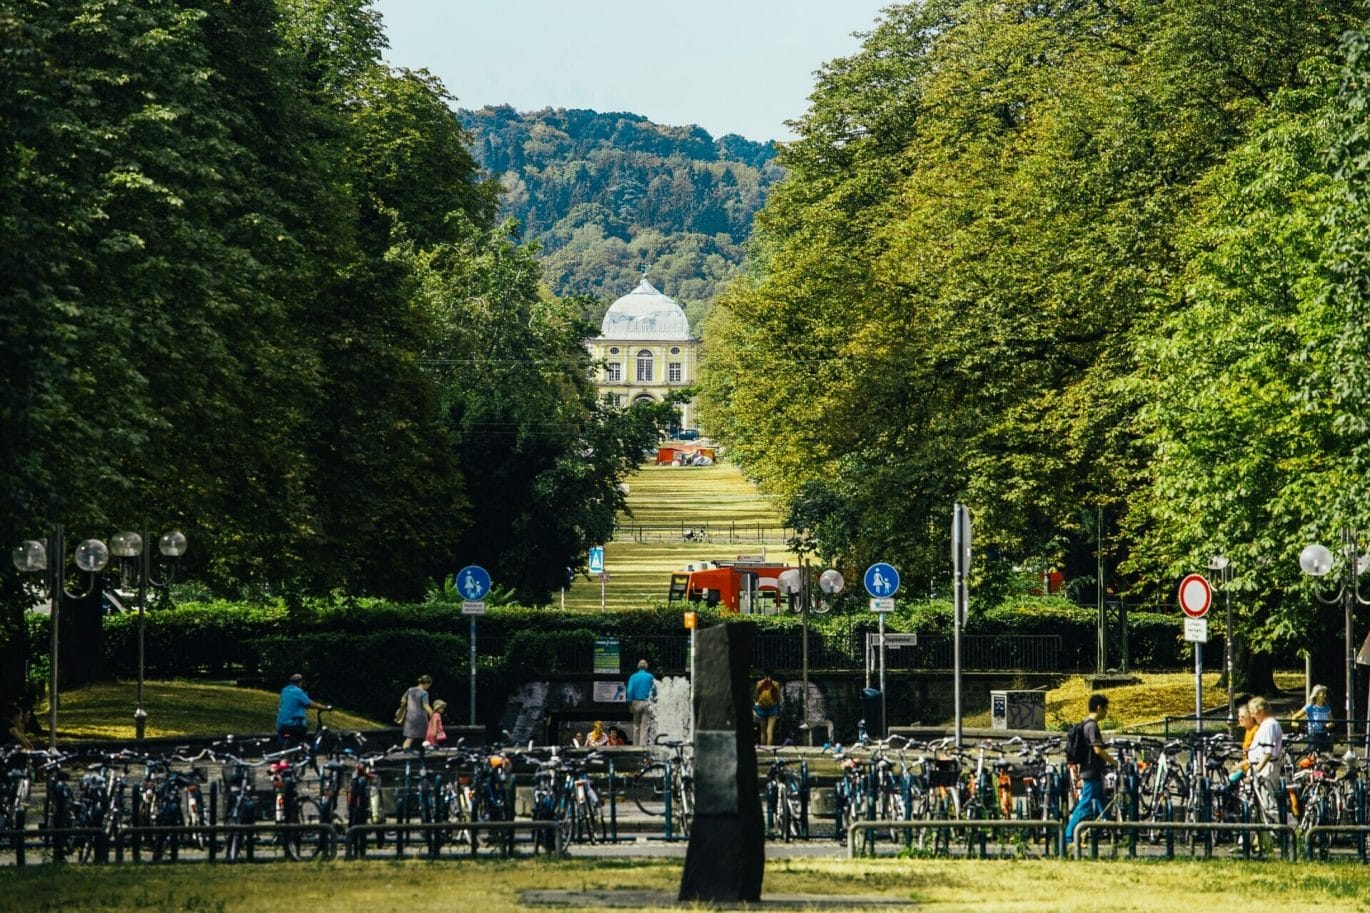 Stedentrip naar Bonn: verrassend anders